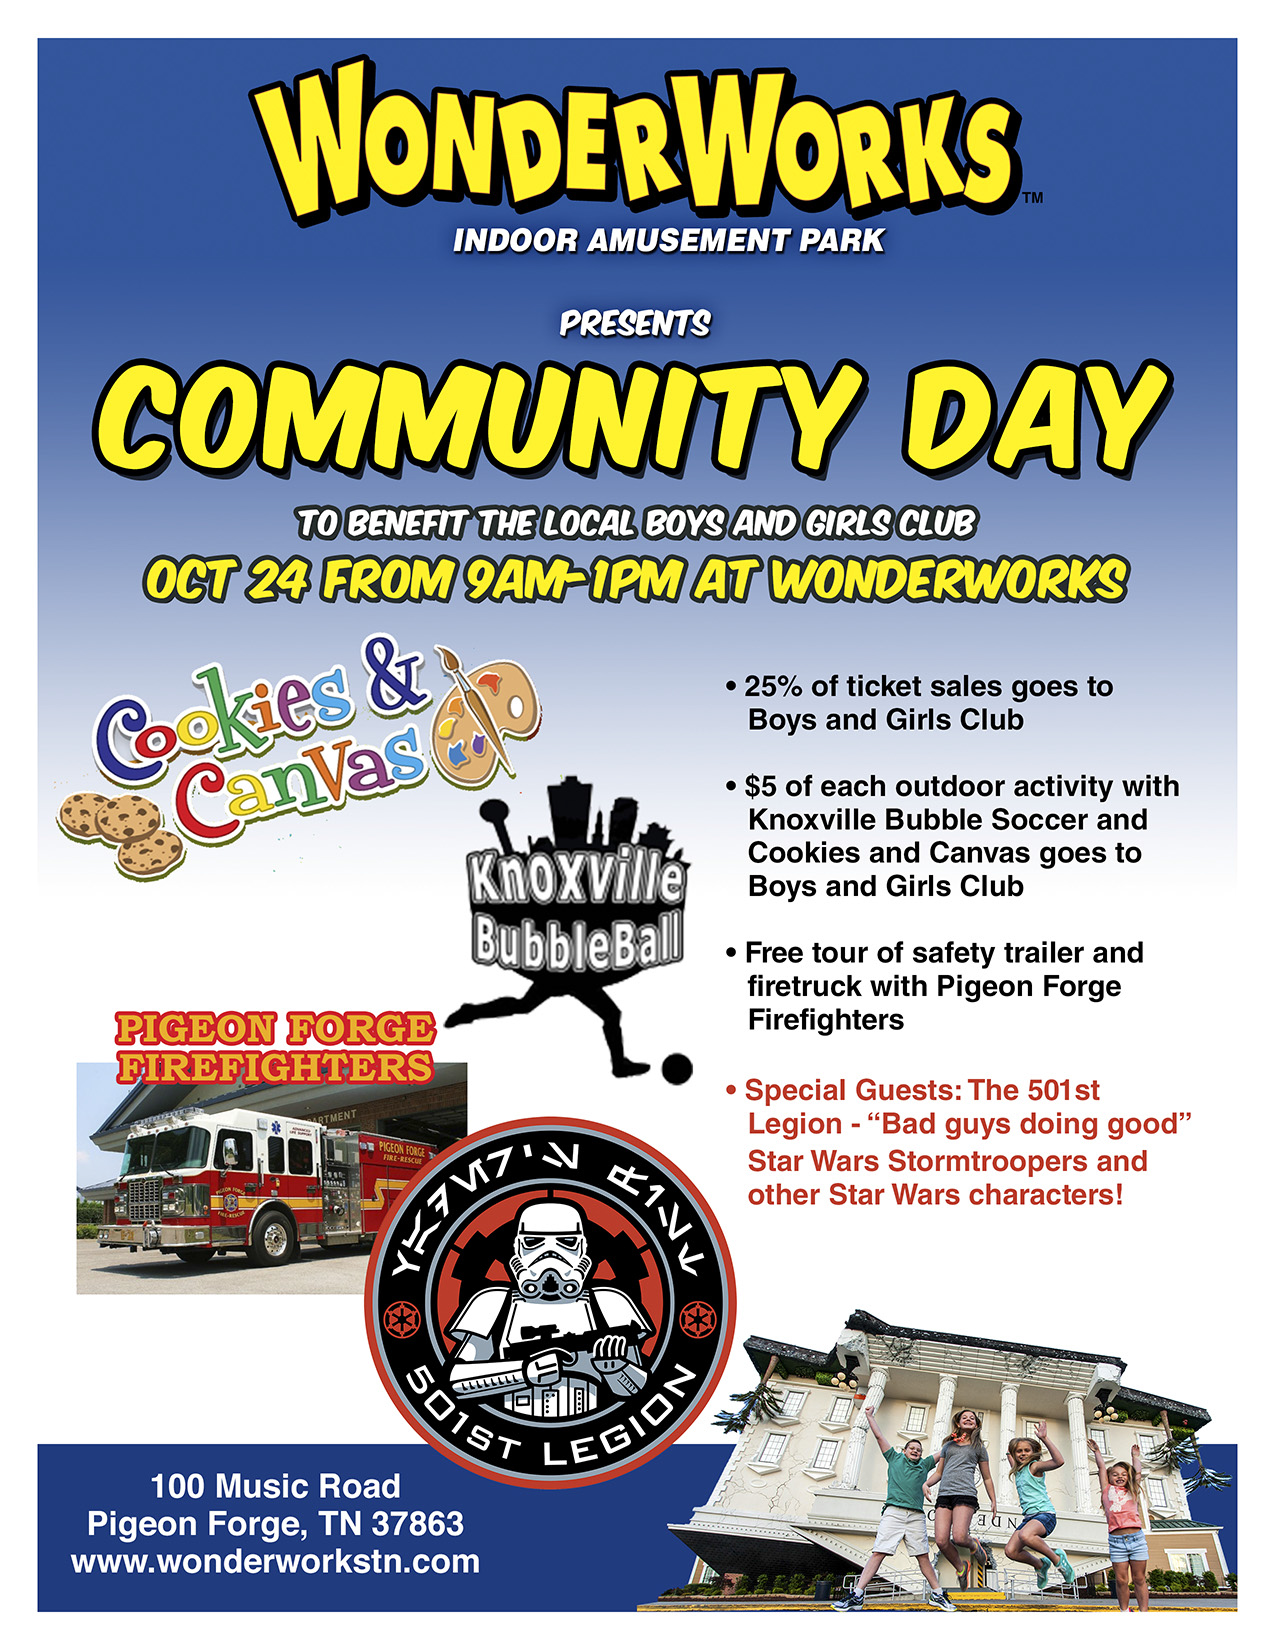 WonderWorks Community Day